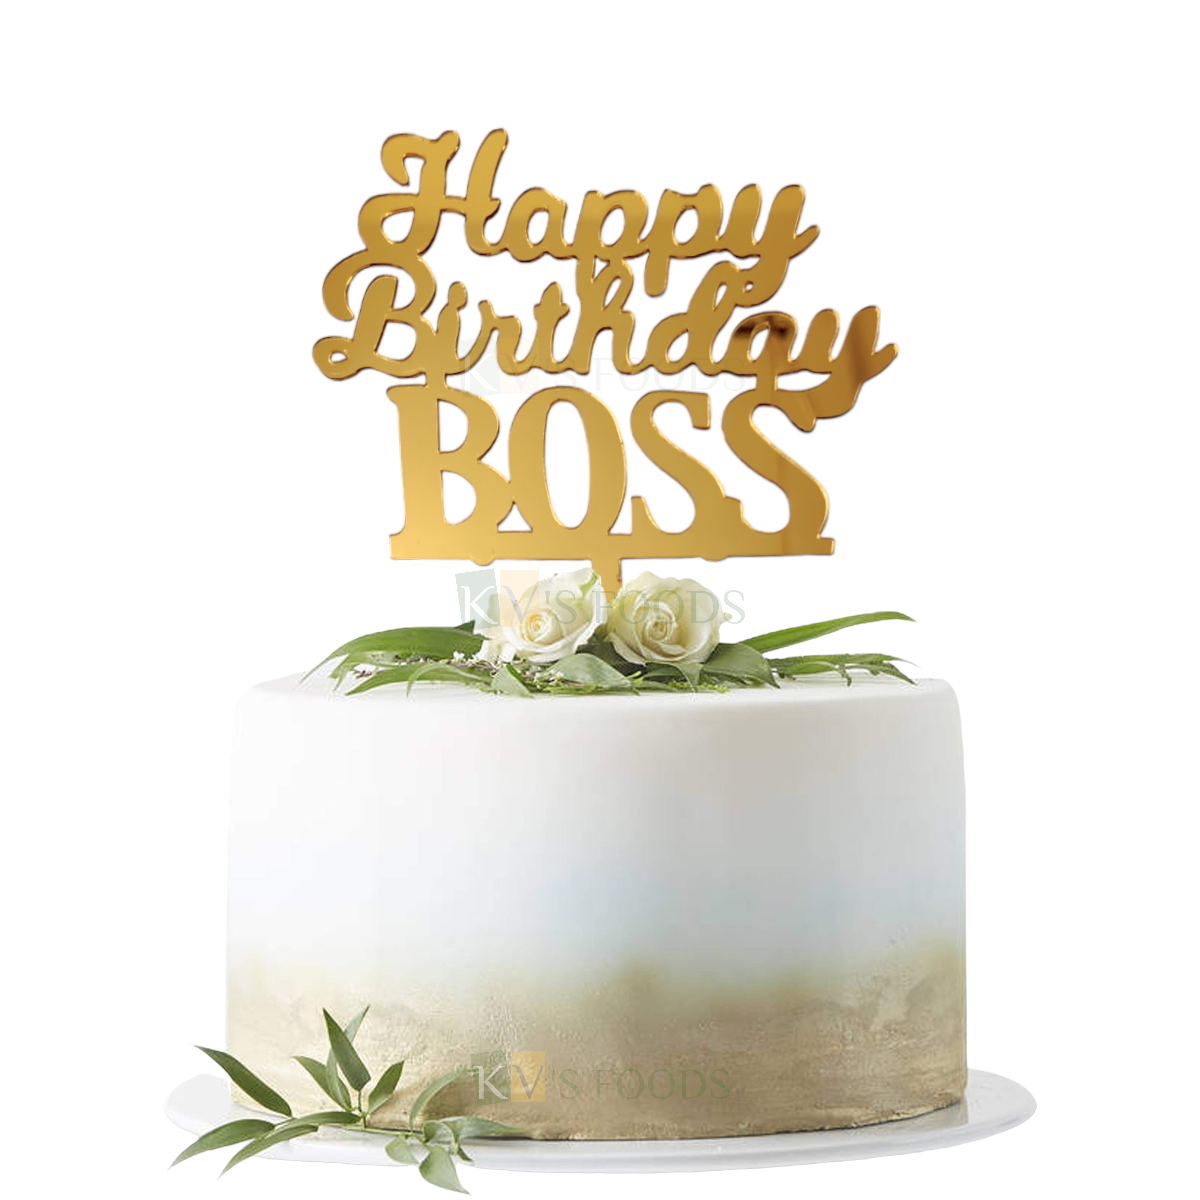 1PC Golden Acrylic Shiny Glass Finish Happy Birthday Boss Letters Cake Topper, Sir Birthday Cake Insert, Unique Elegant Font Design Boss Birthday Celebrations Party Cake Topper DIY Cake Decorations